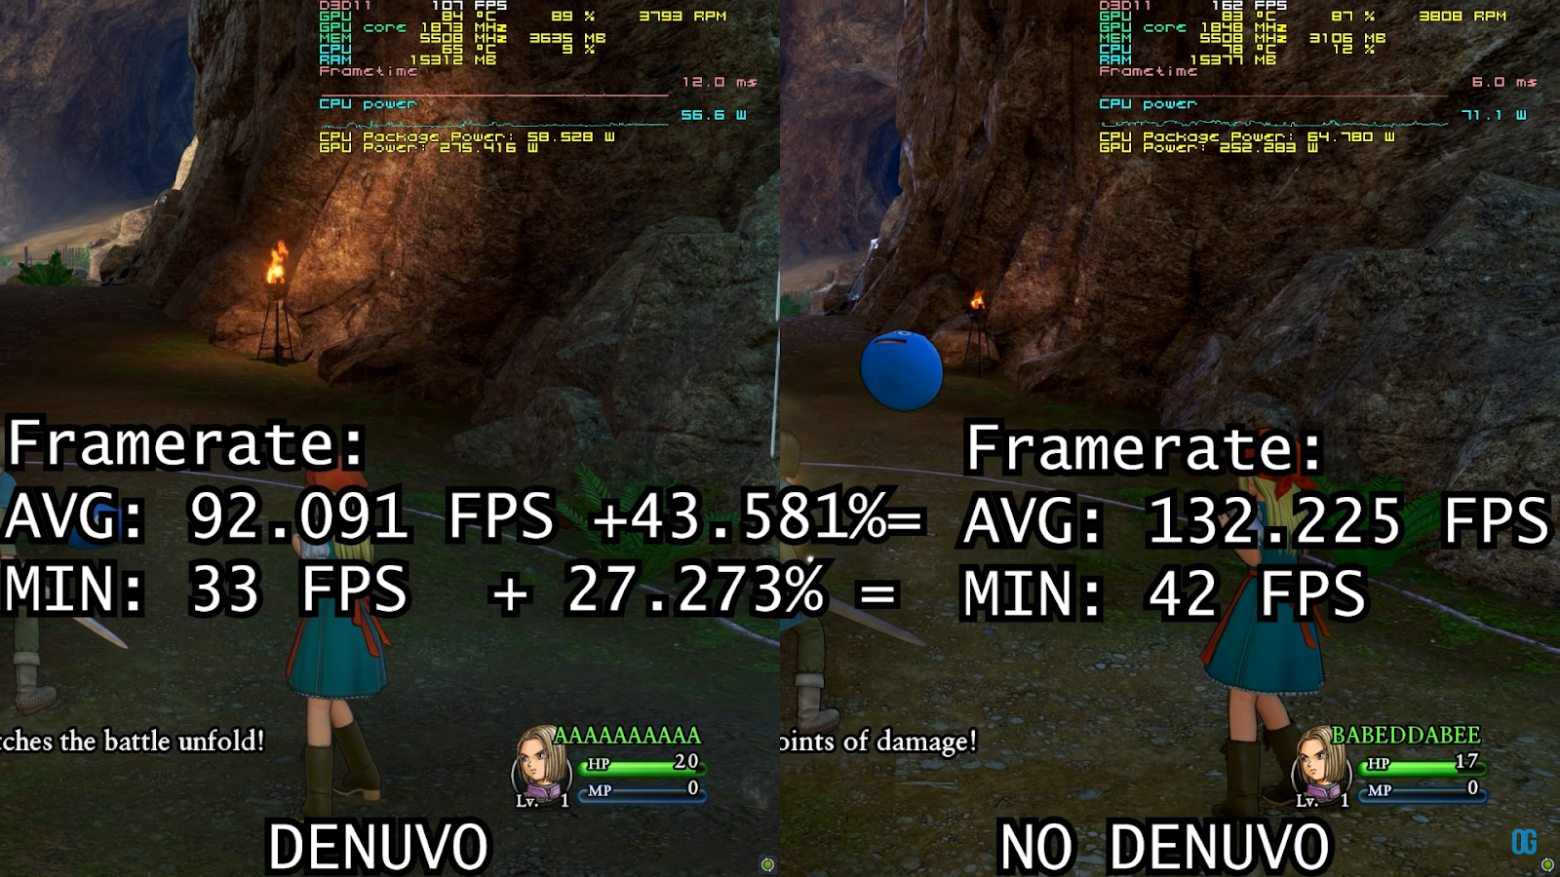 Без Denuvo фреймрейт в Dragon Quest XI значительно возрос